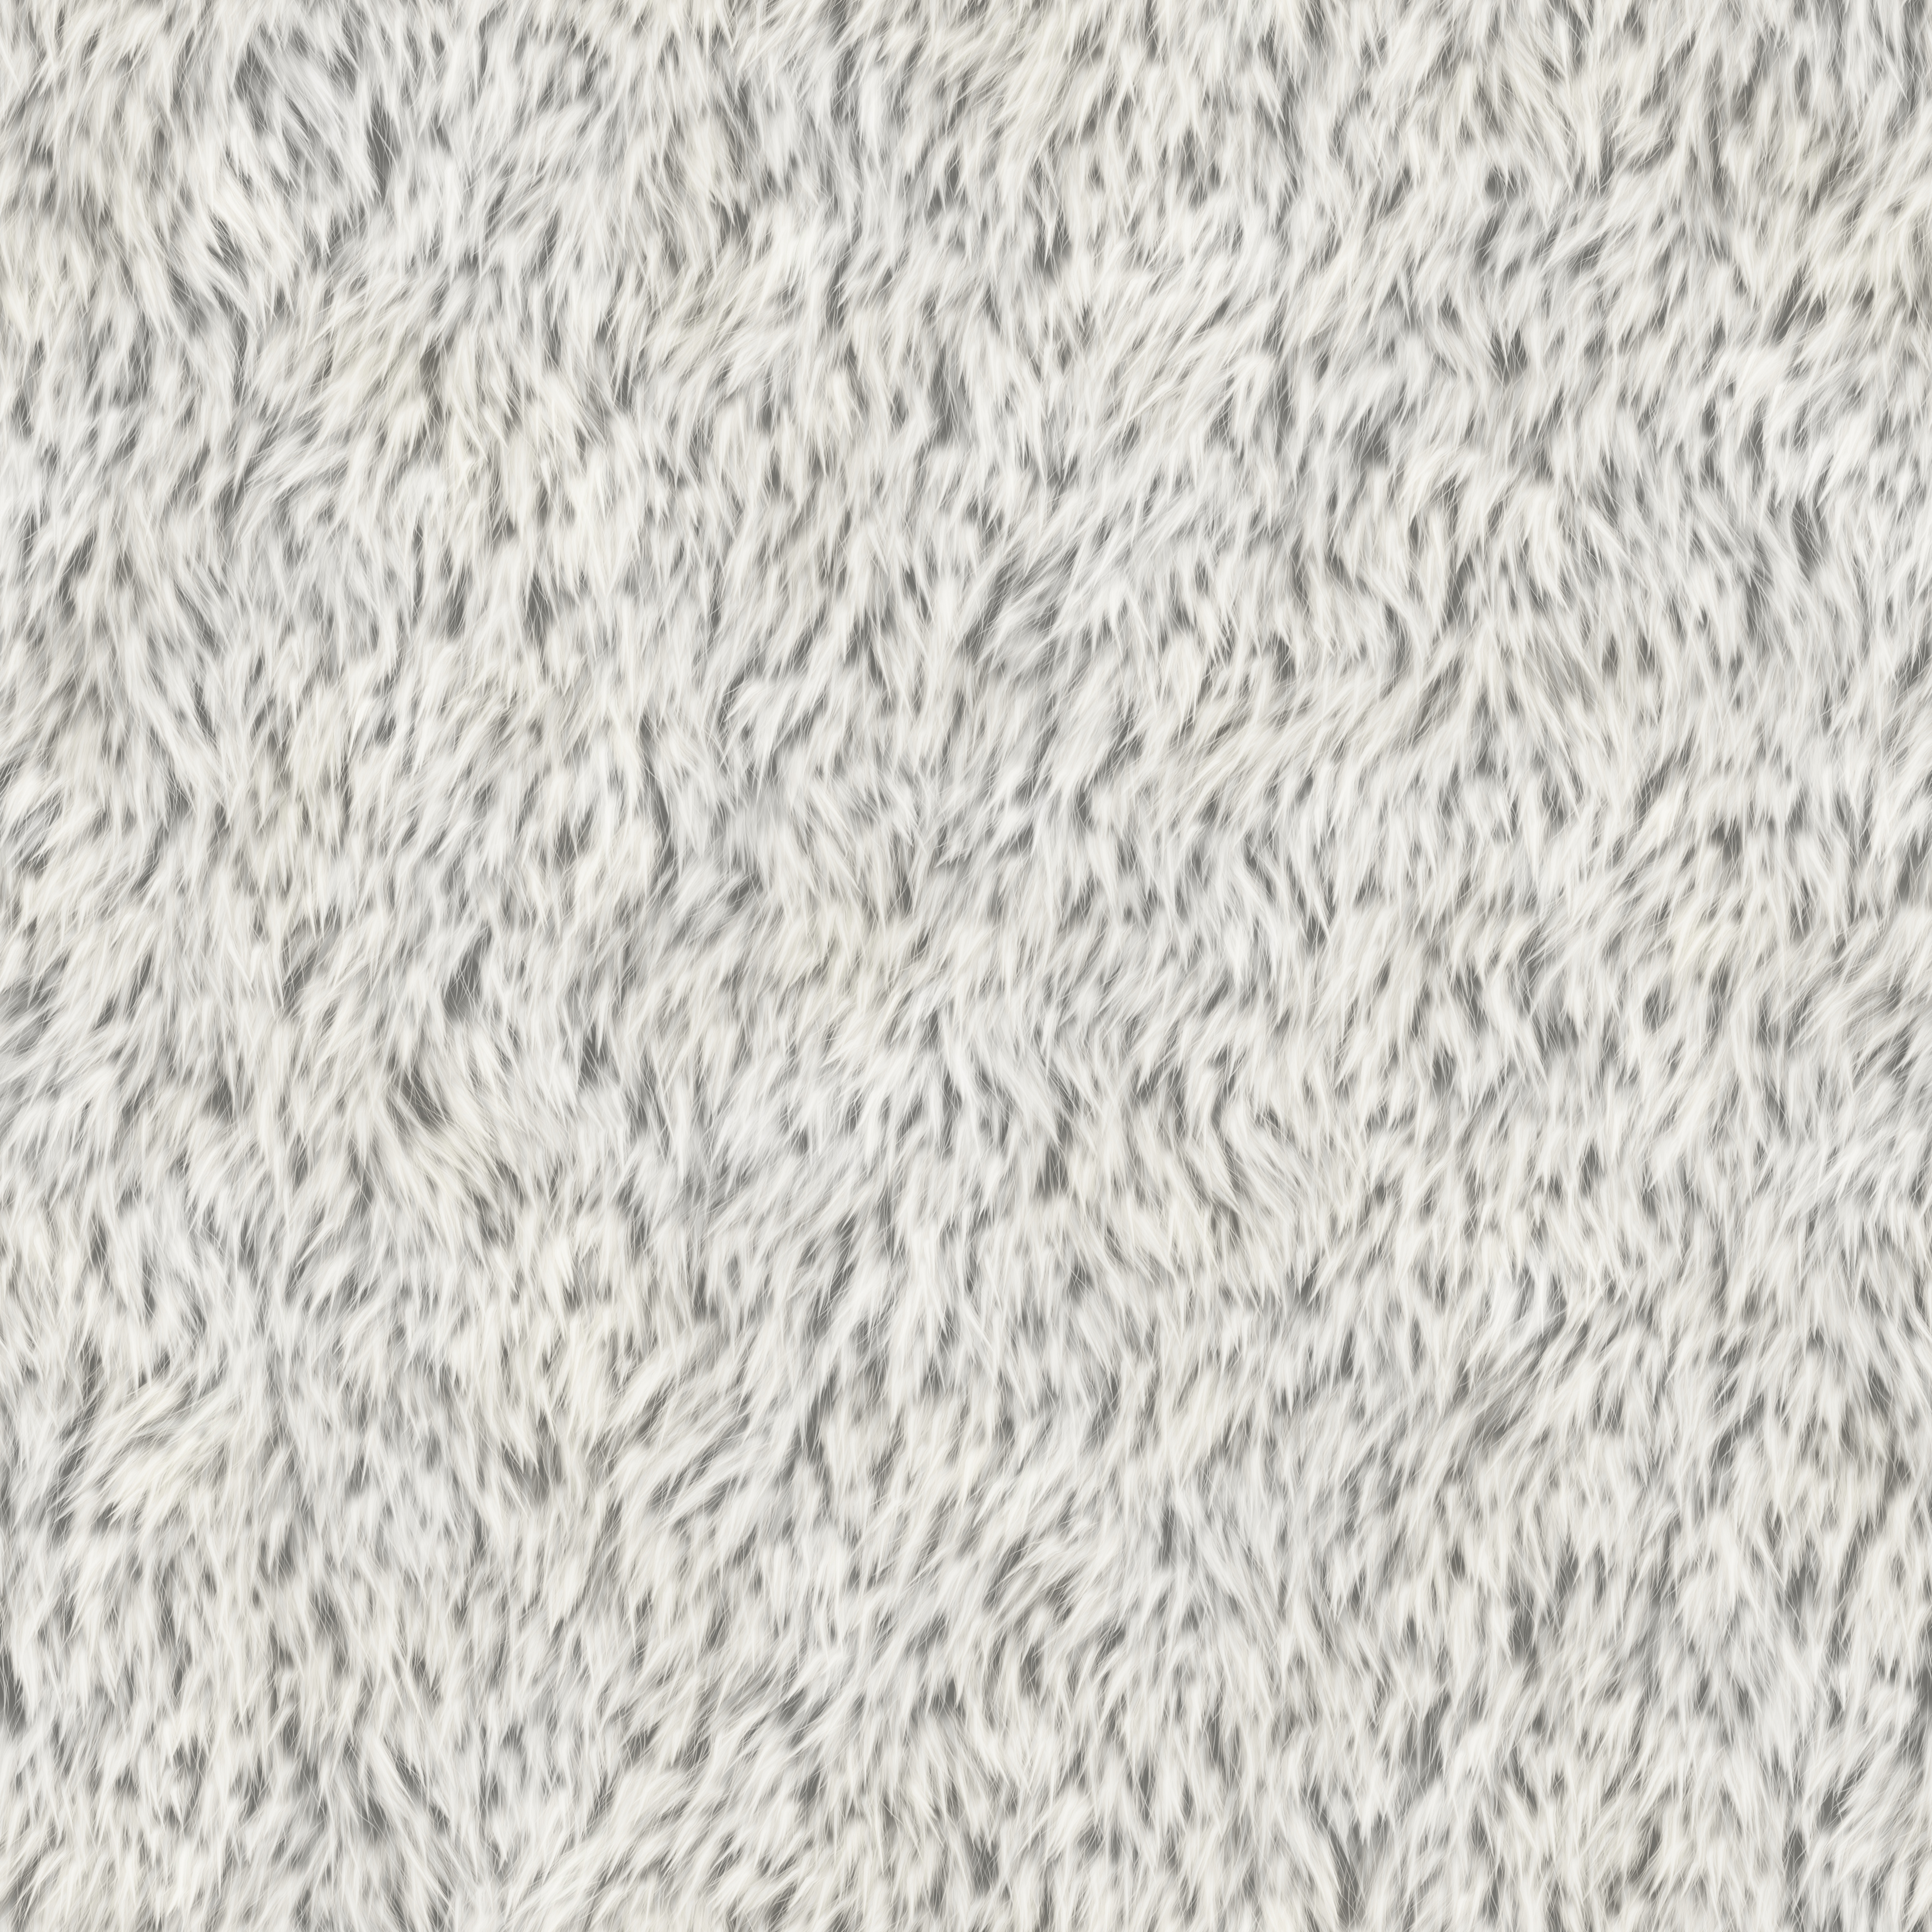 Free download White Fur Background Stock Photo Thinkstock [511x335] for